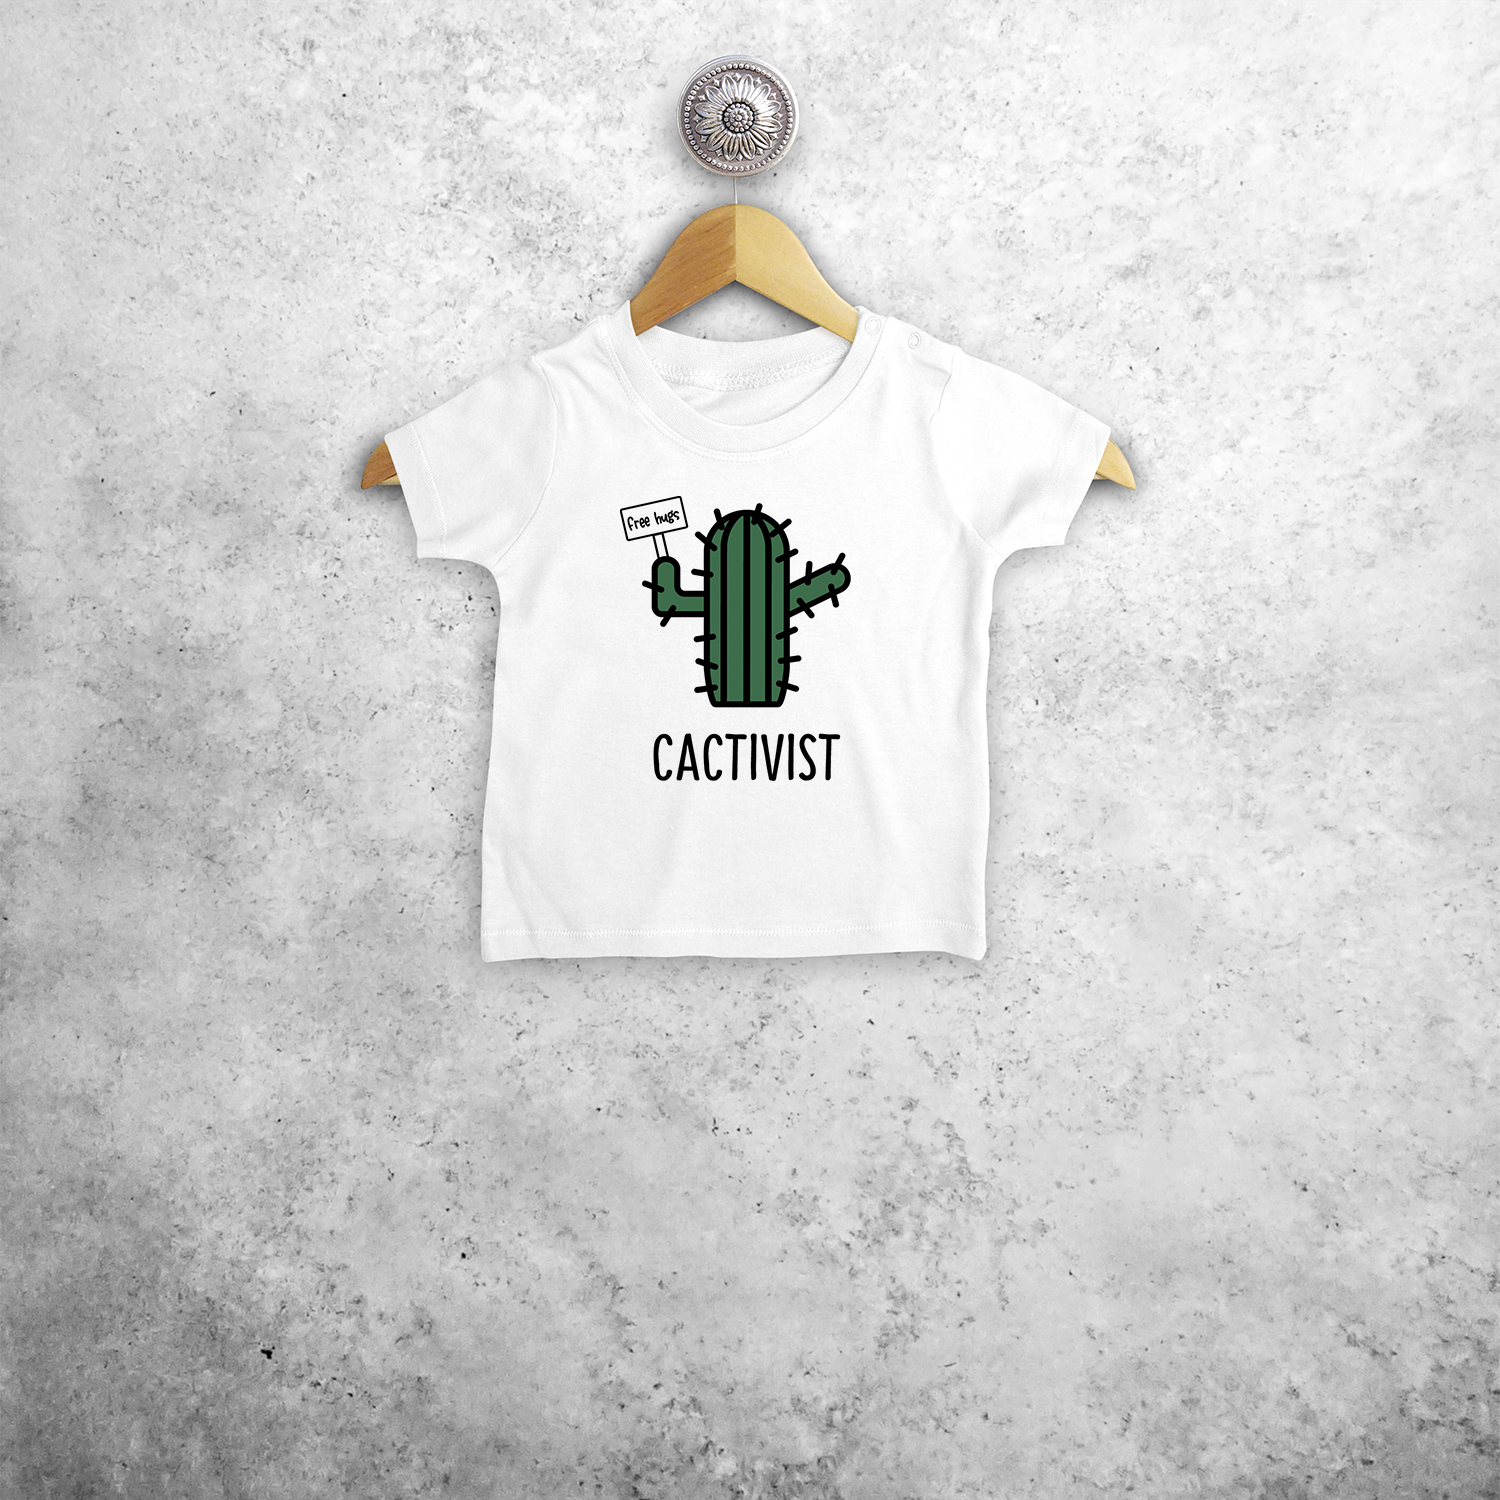 'Cactivist' baby shortsleeve shirt